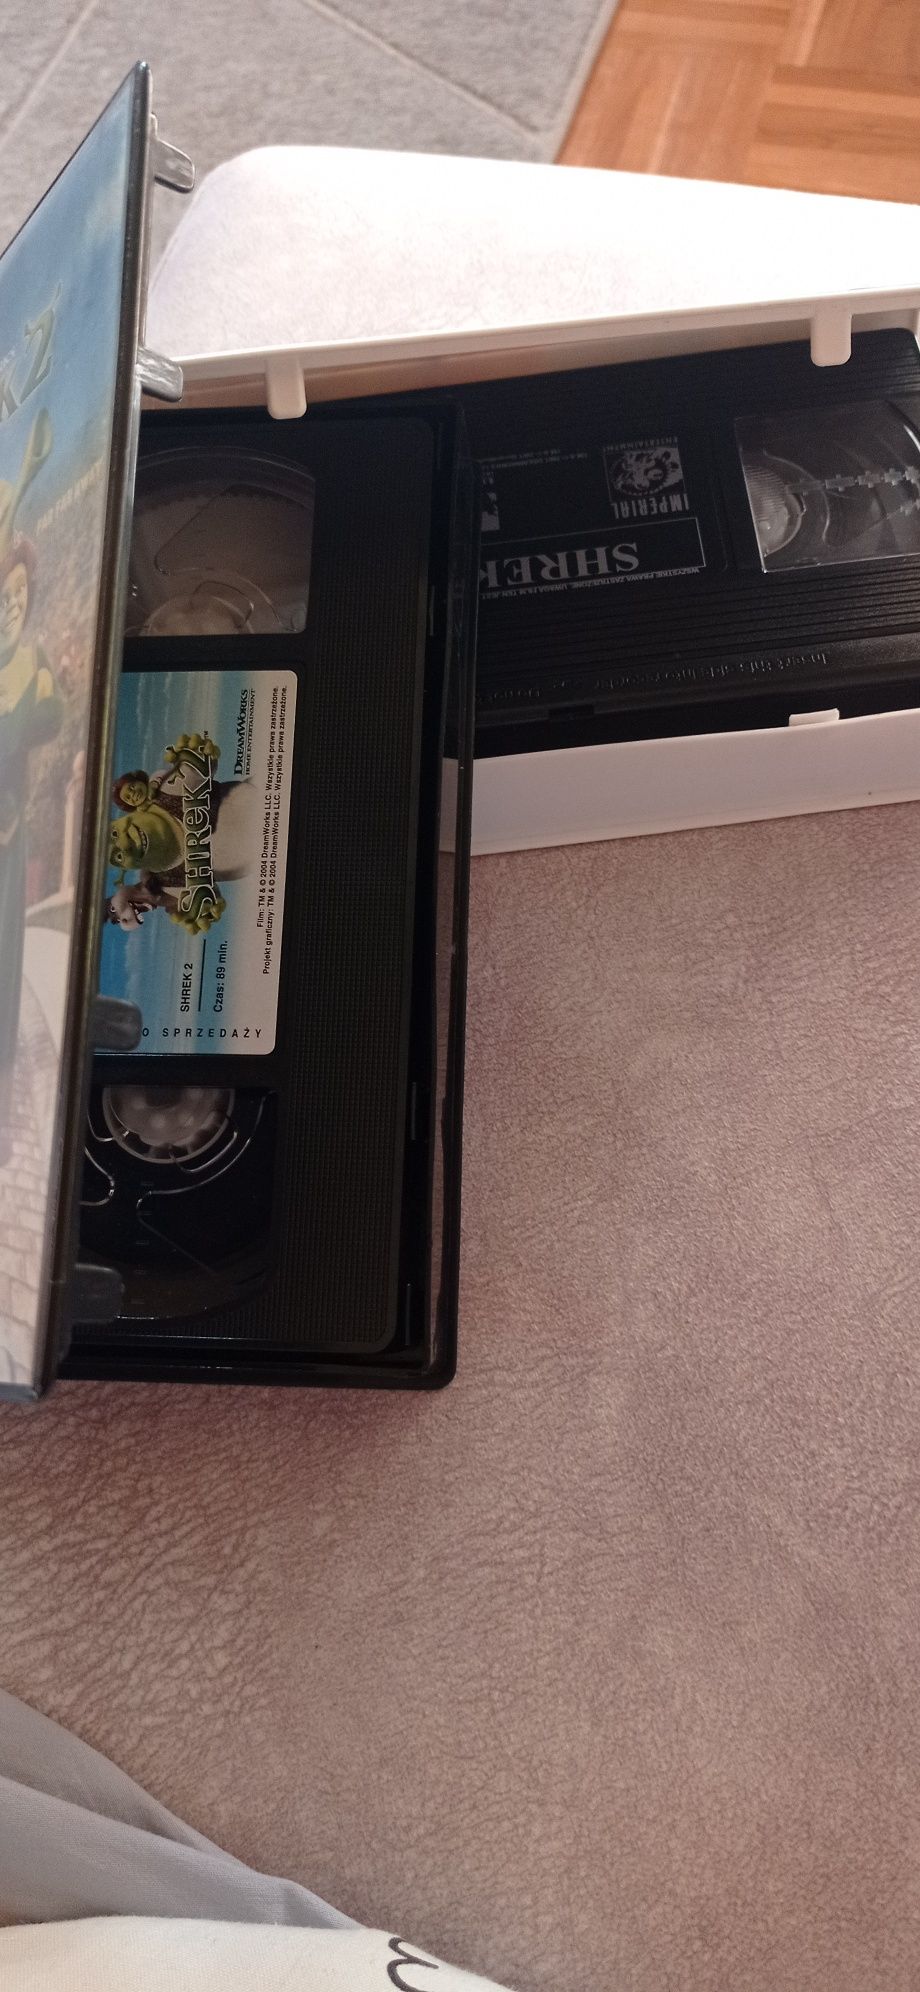 SHREK dwa filmy VHS